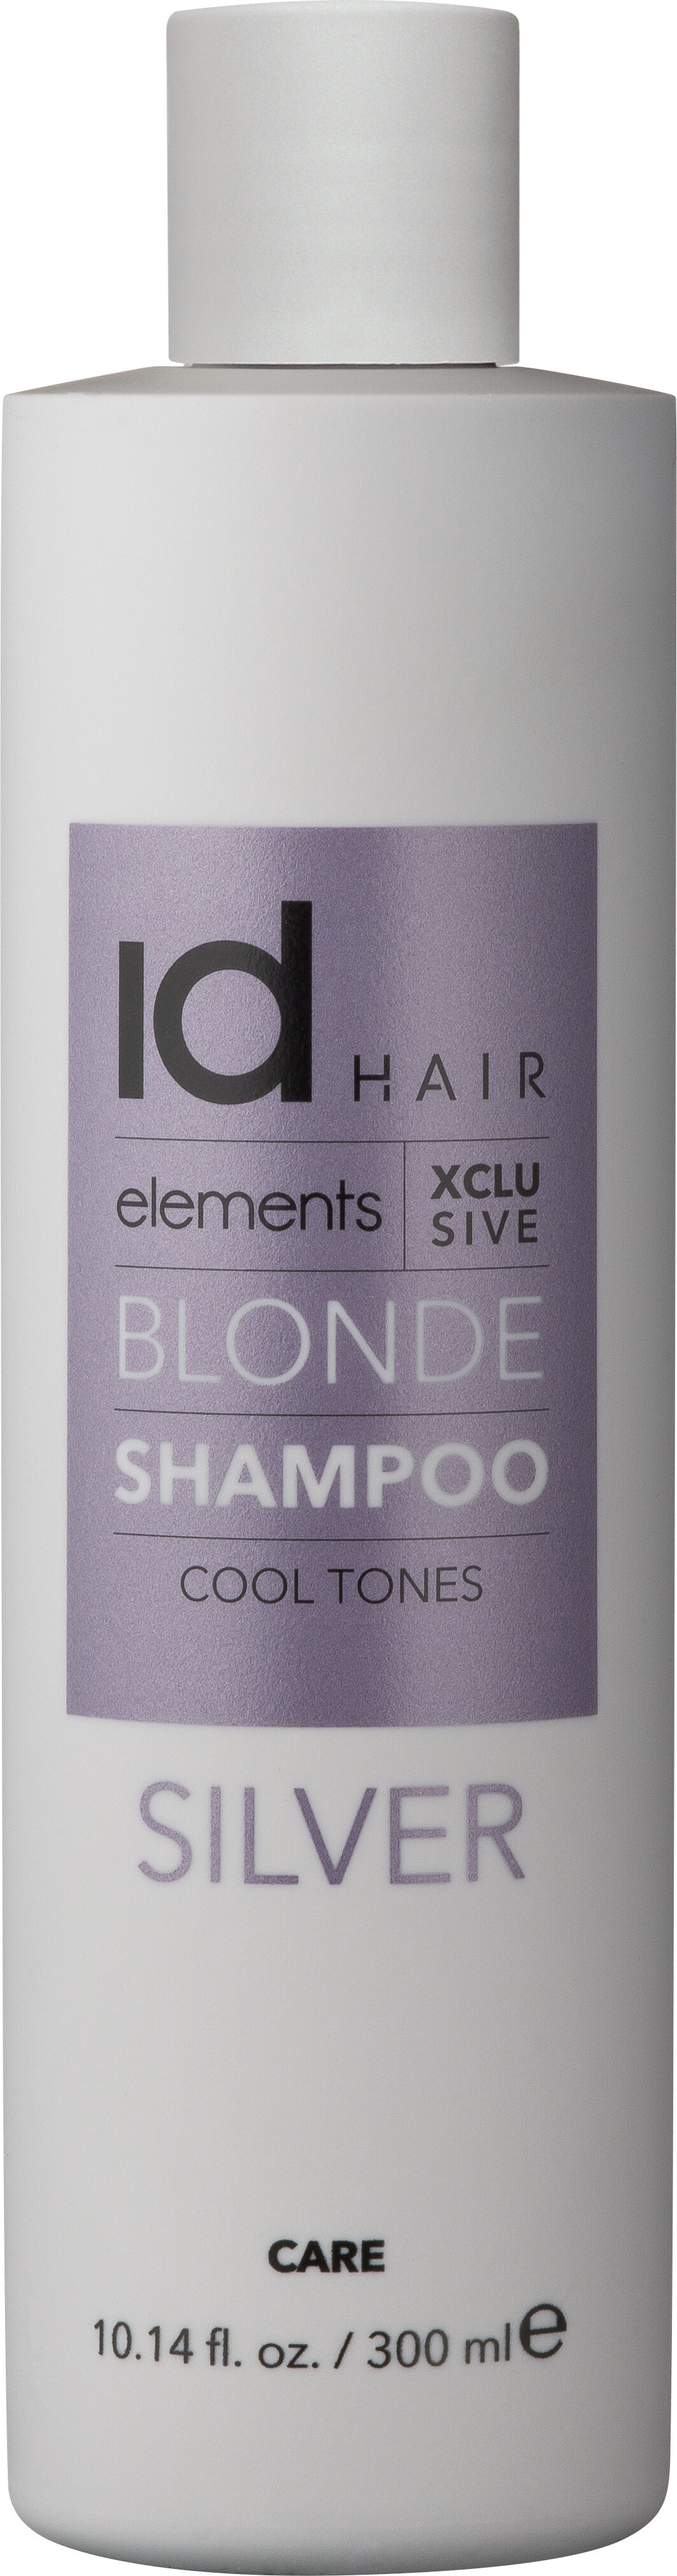 Billede af Id Hair - Elements Xclusive Blonde Silver Shampoo - 300 Ml hos Gucca.dk